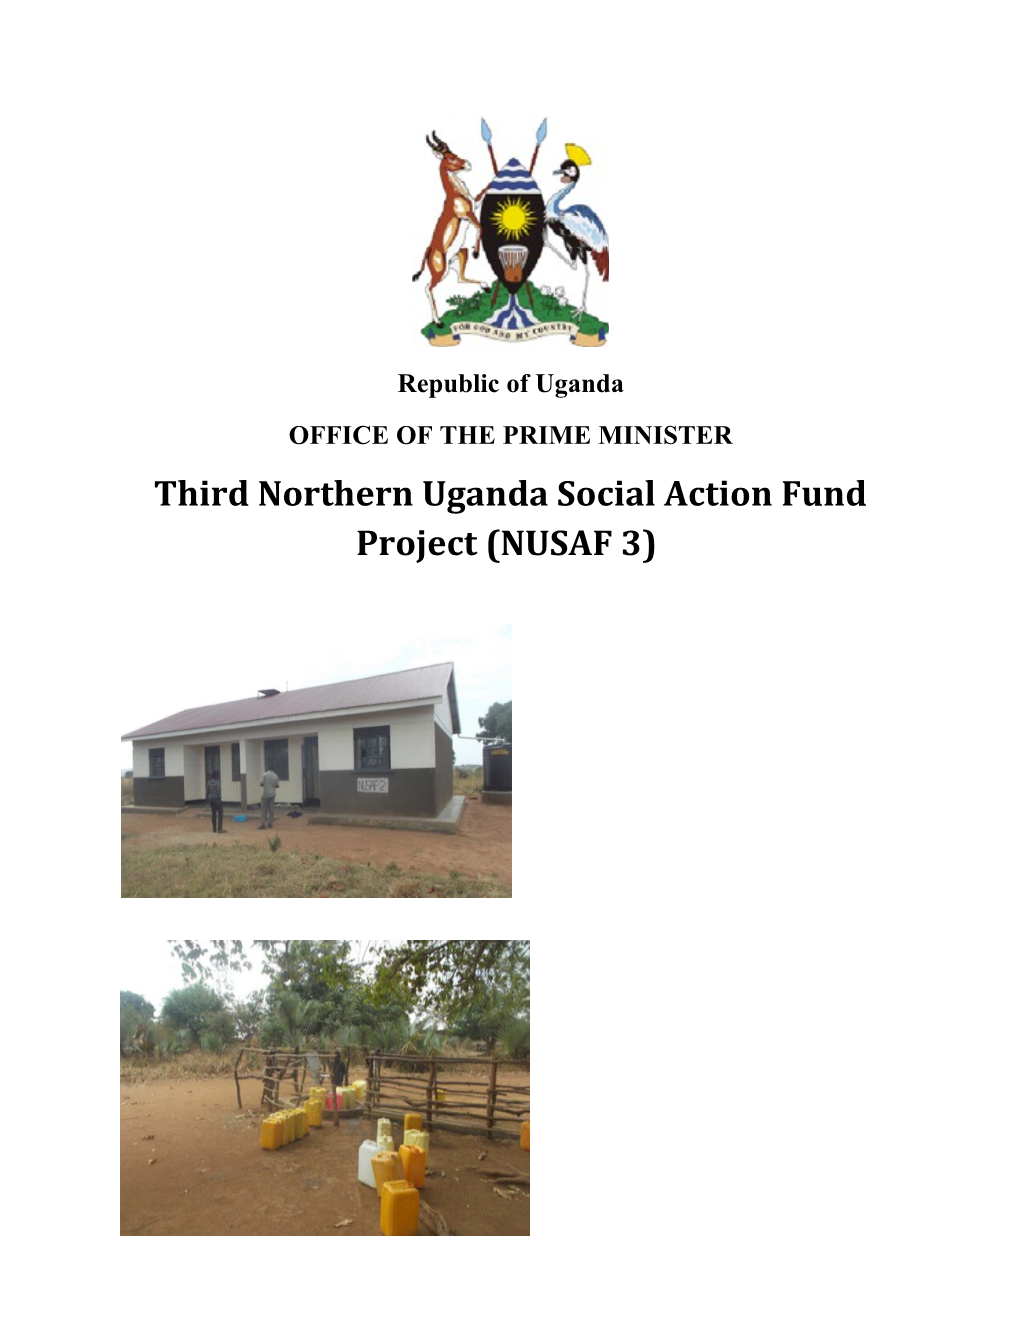 Third Northern Uganda Social Action Fund Project (NUSAF 3)